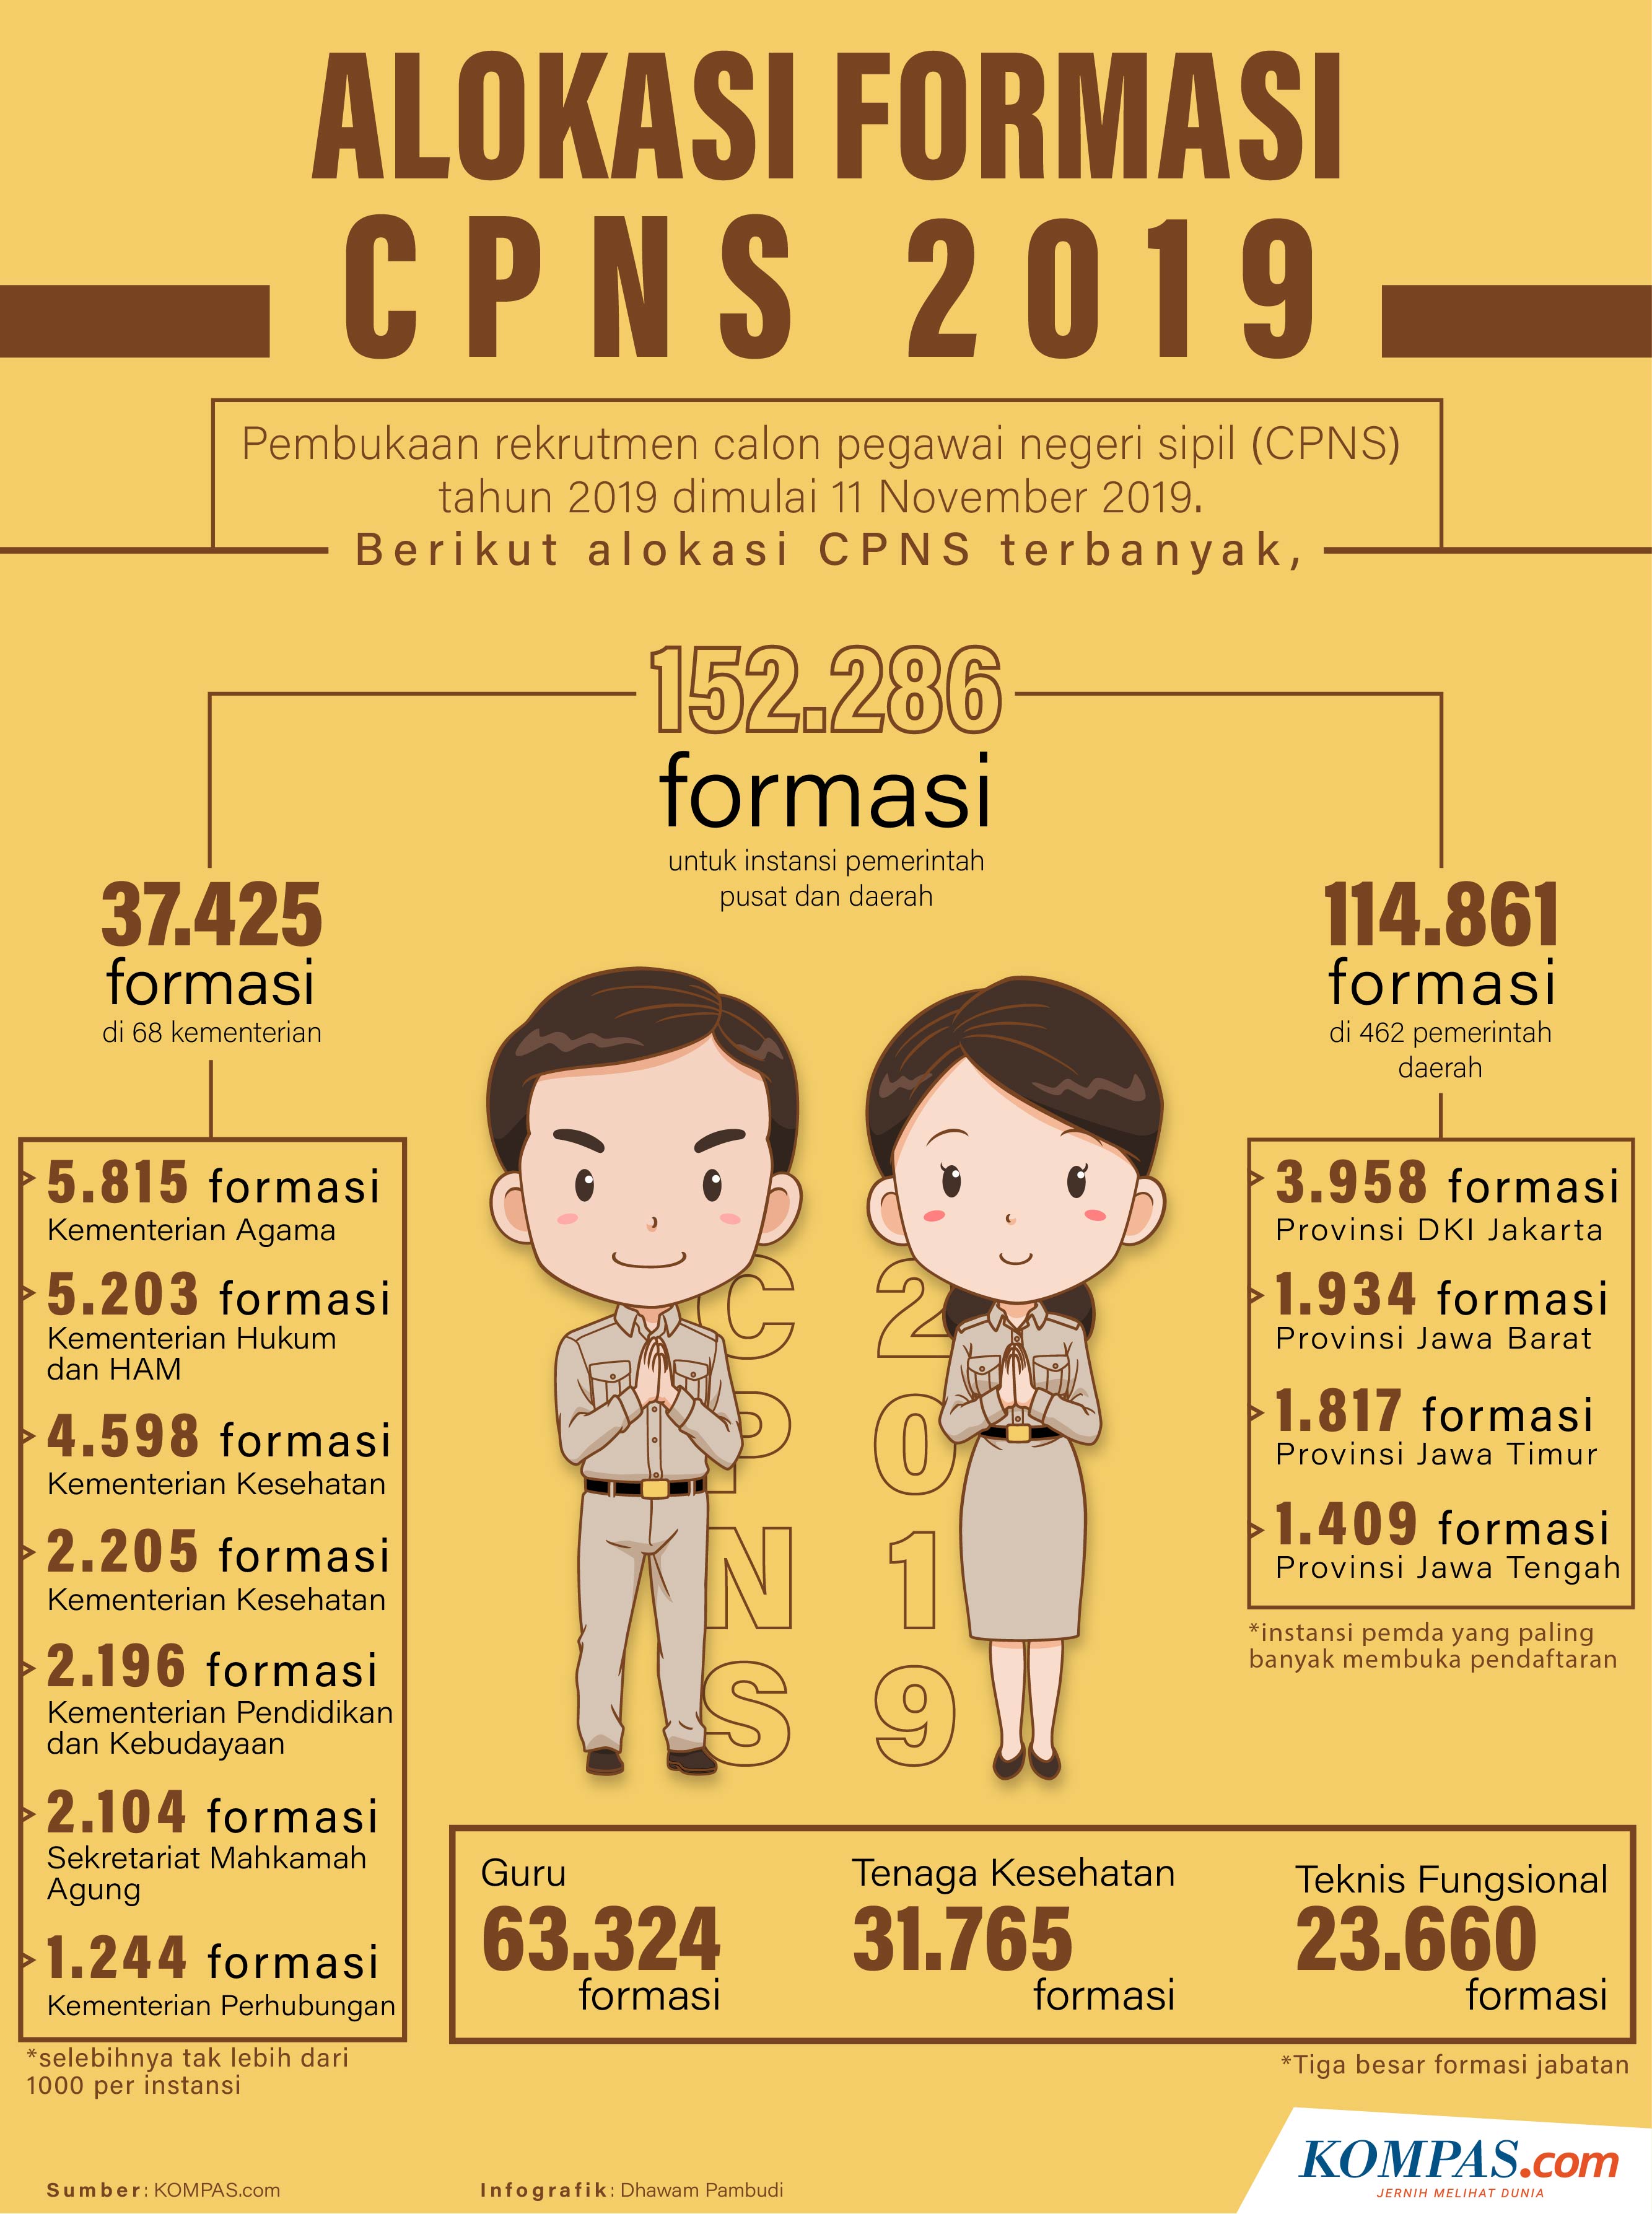 Infografik Alokasi Formasi Cpns 2019